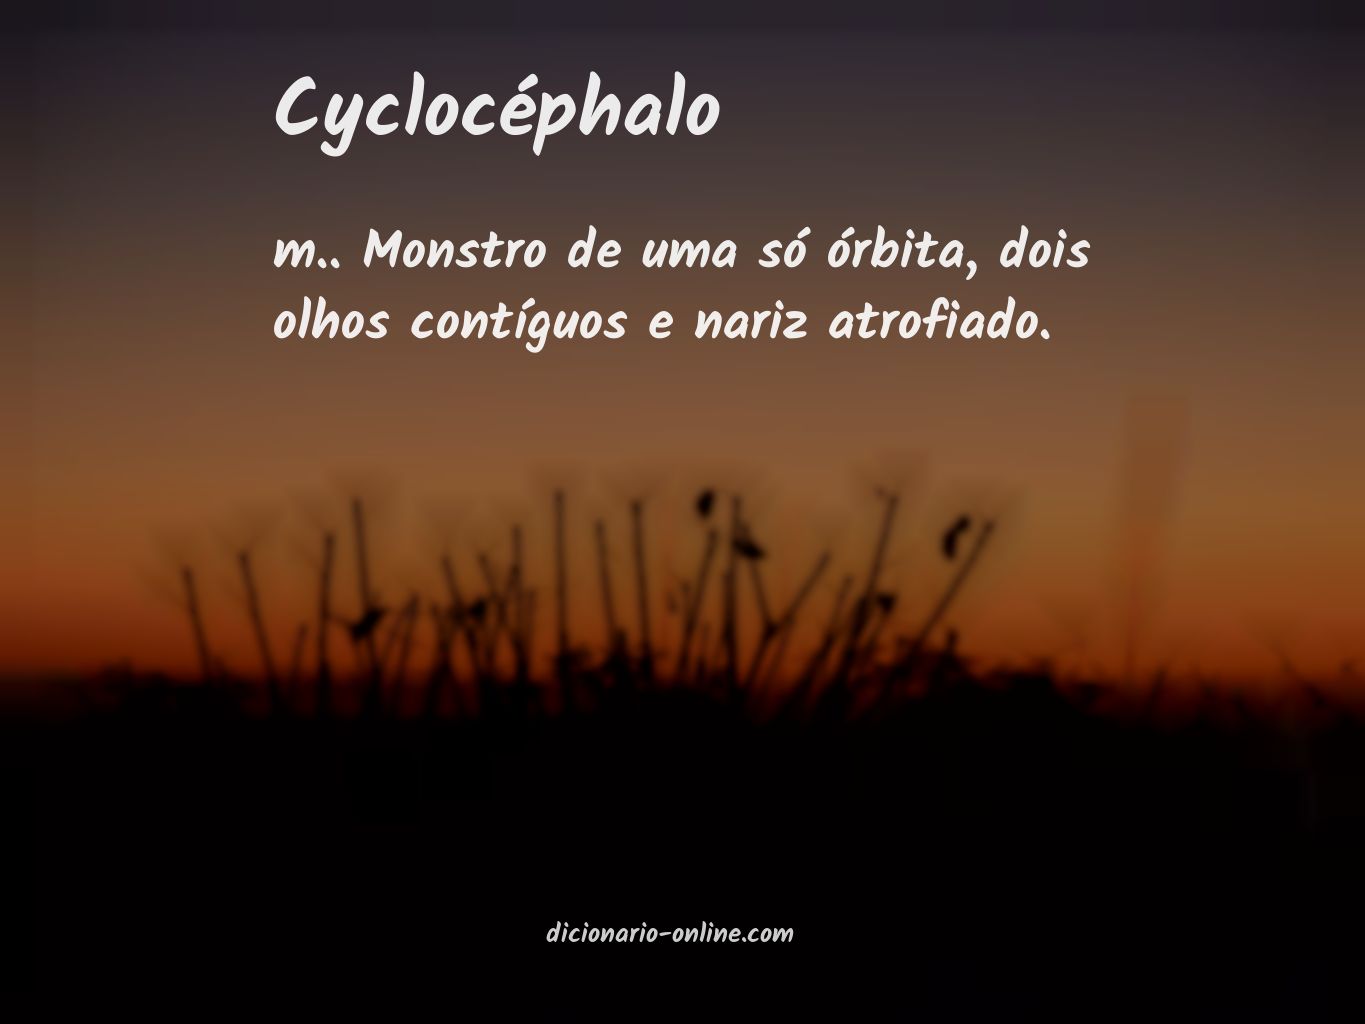 Significado de cyclocéphalo